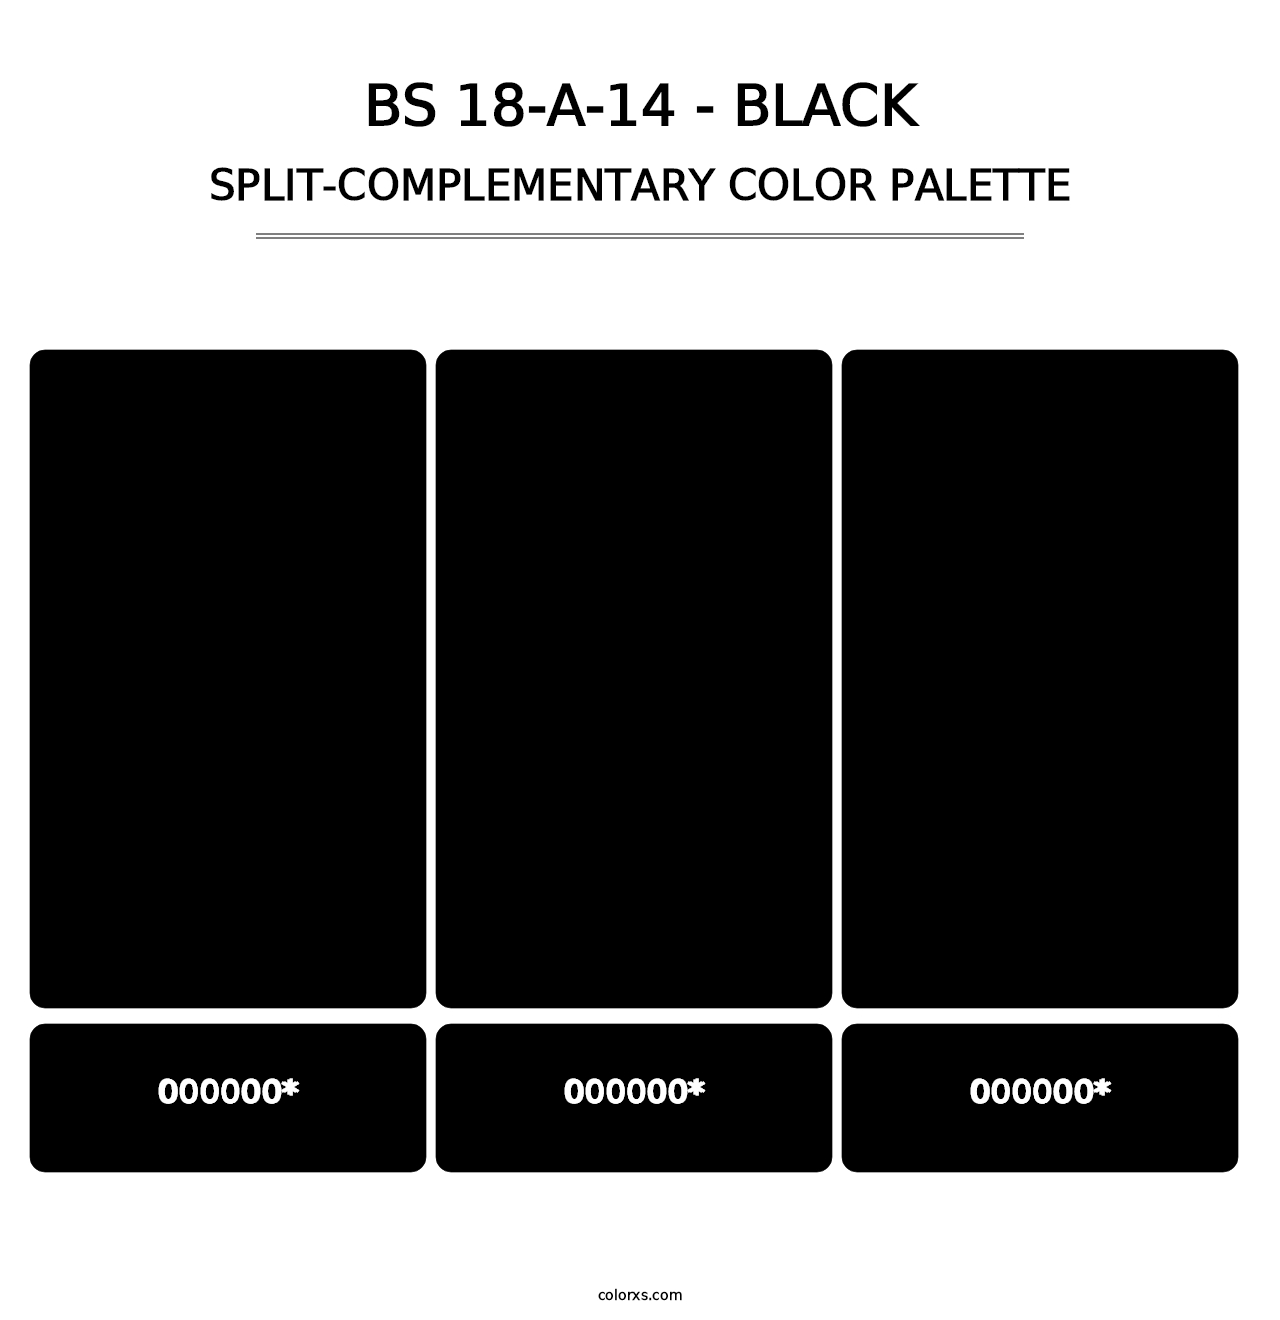 BS 18-A-14 - Black - Split-Complementary Color Palette